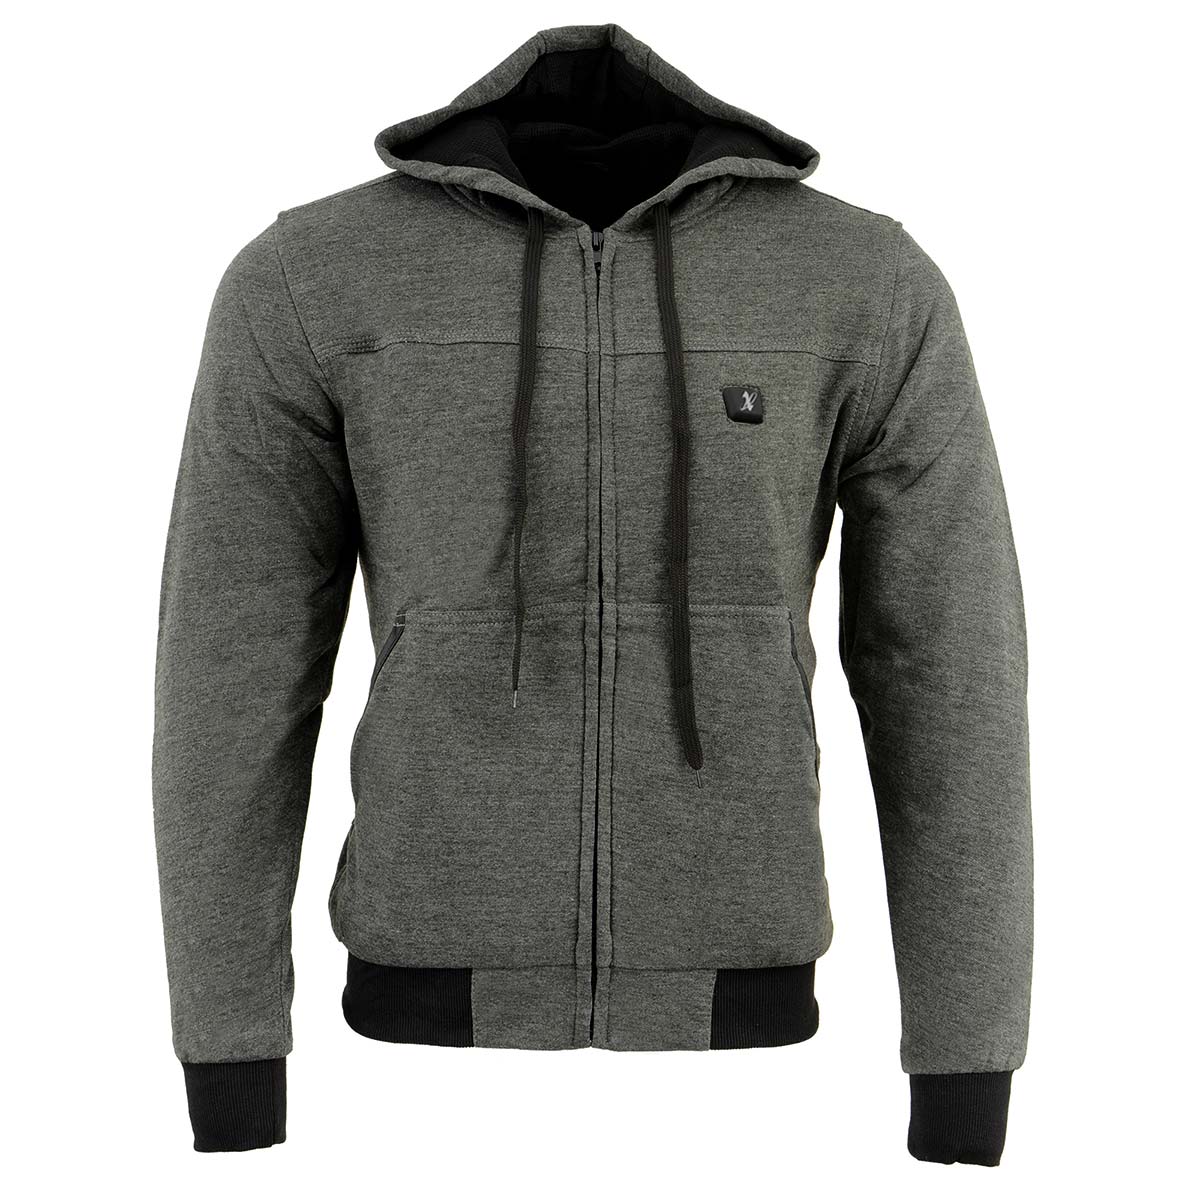 Nexgen Heat NXM1713SET Men's Grey 'Fiery' Heated Hoodies - Front Zipper Textile Heated Jacket for Winter w/Battery Pack